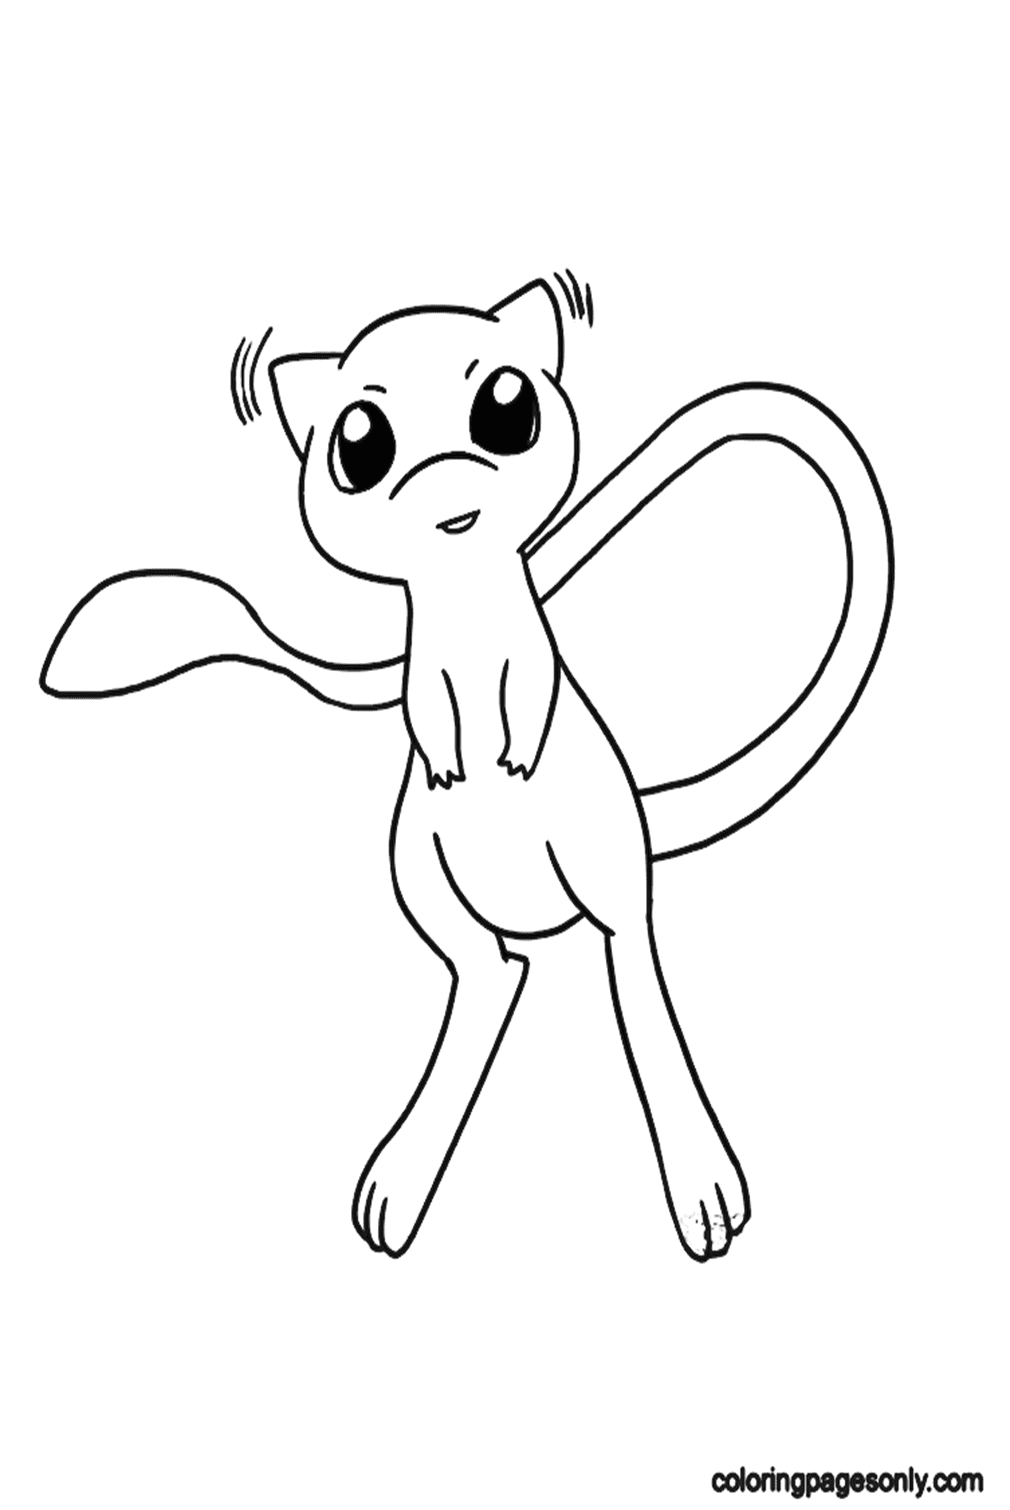 Cute Pokemon Mew from Mew